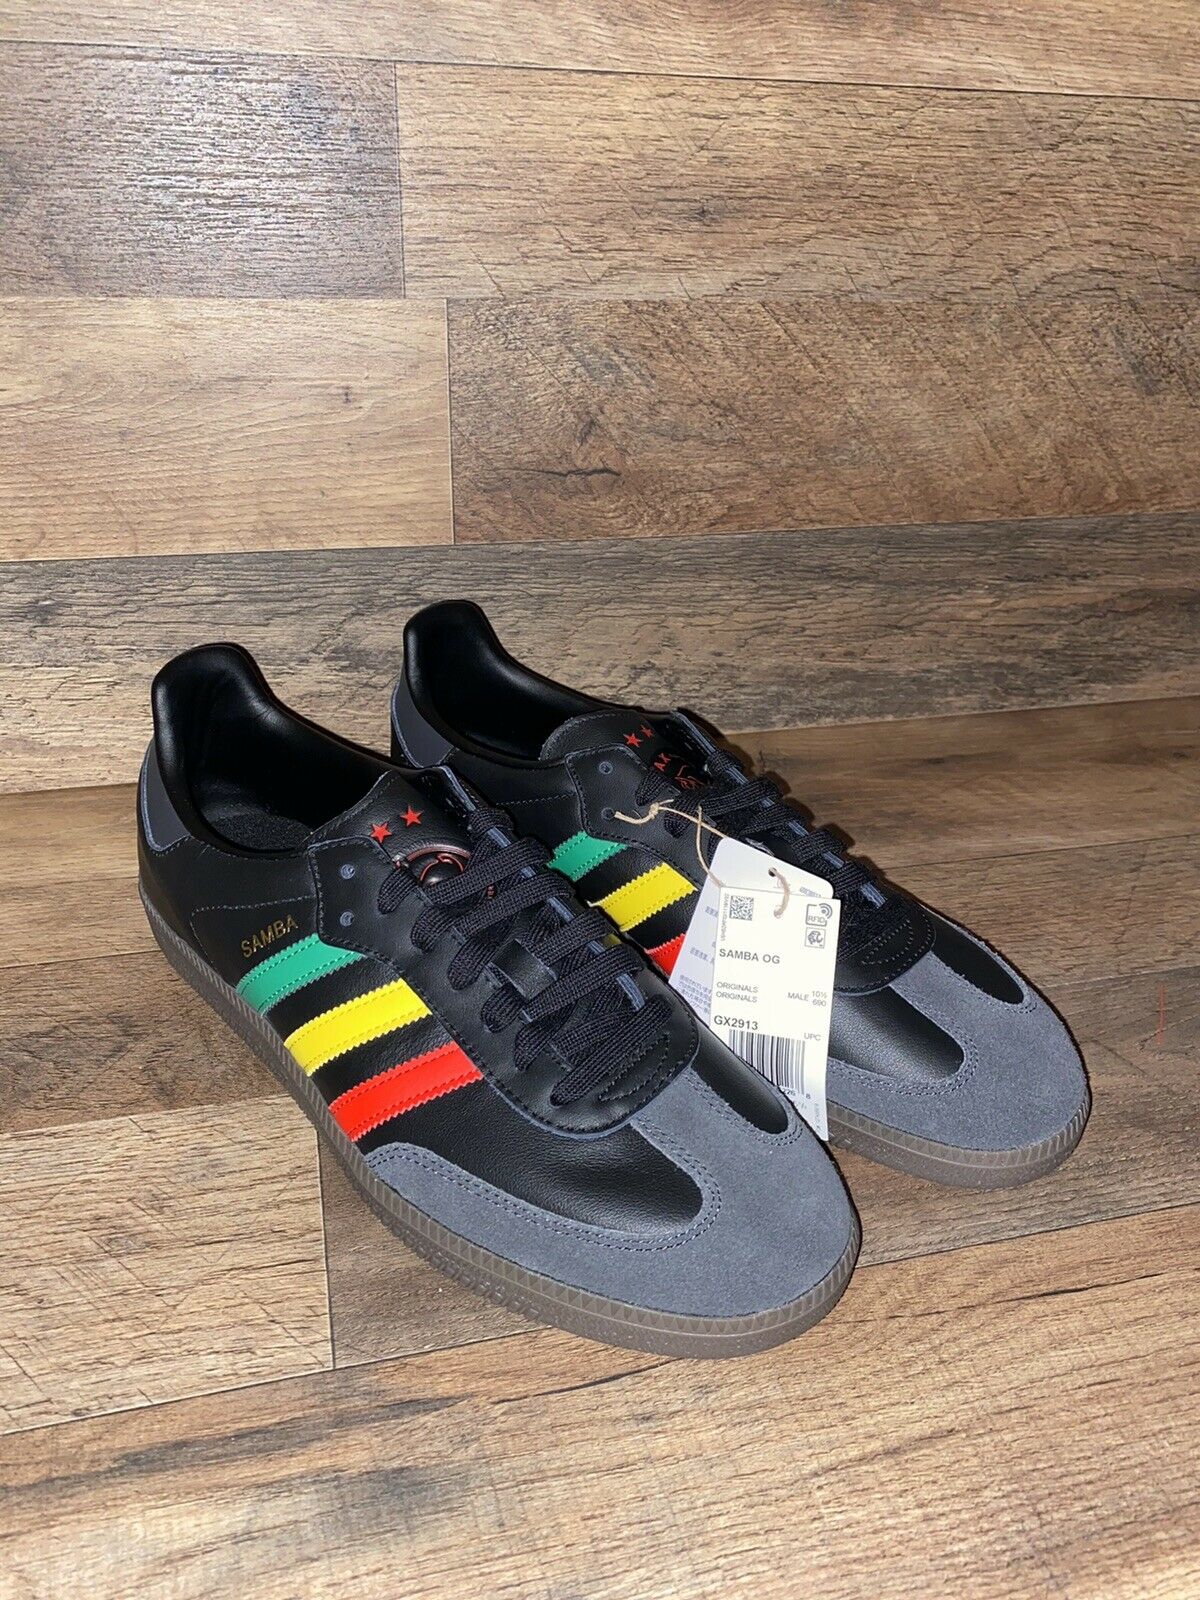 Adidas Samba OG Ajax Shoes Soccer Bob Marley Rasta GX2913 Men's Size 11